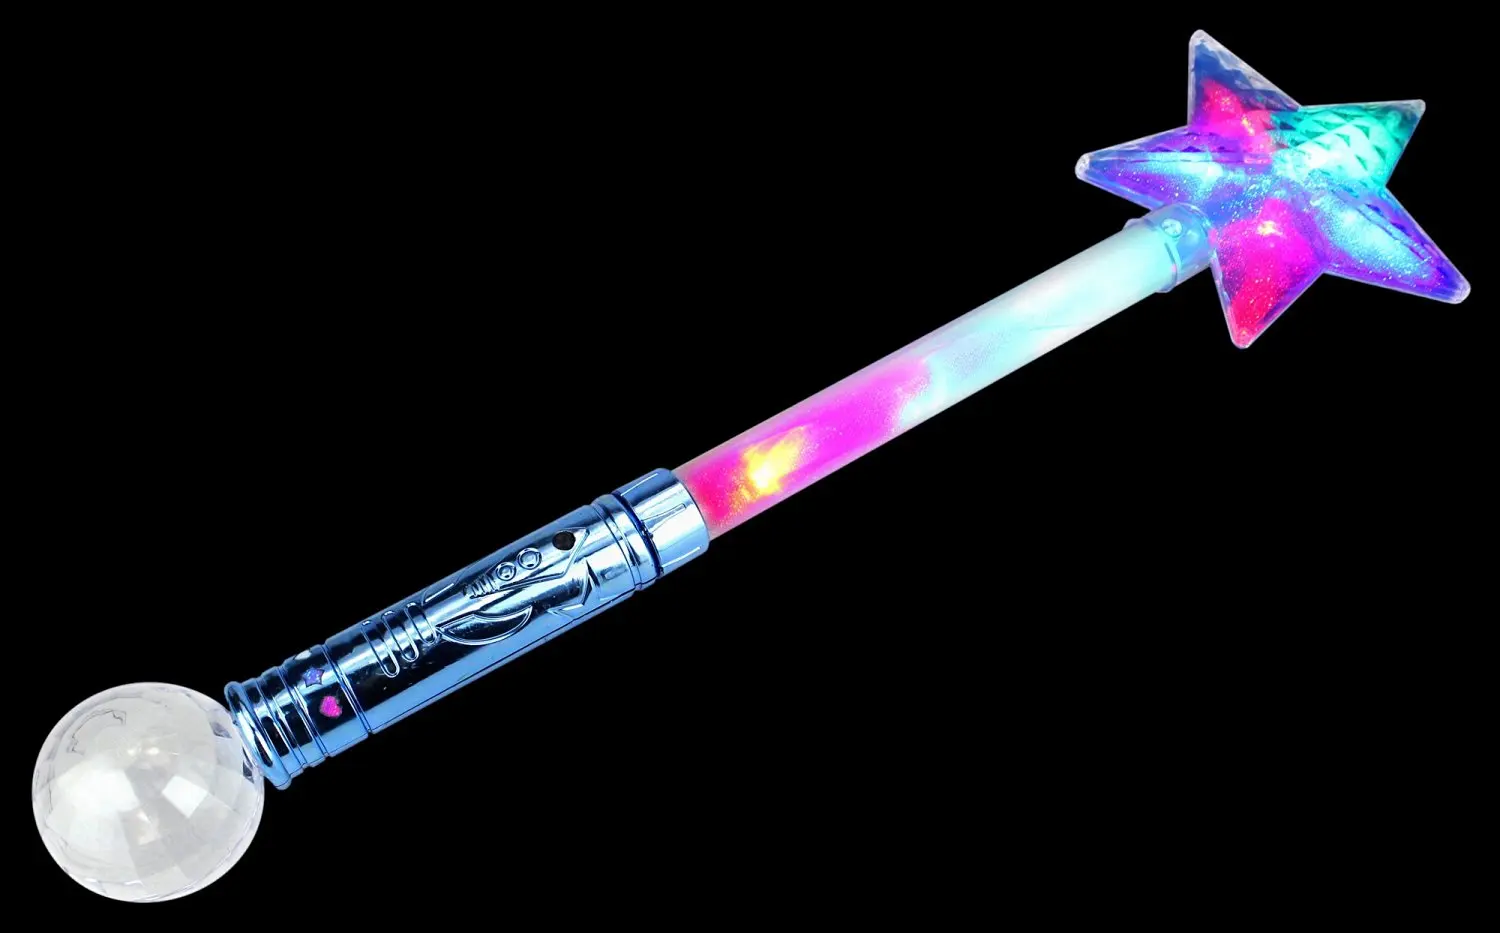 light wand toy